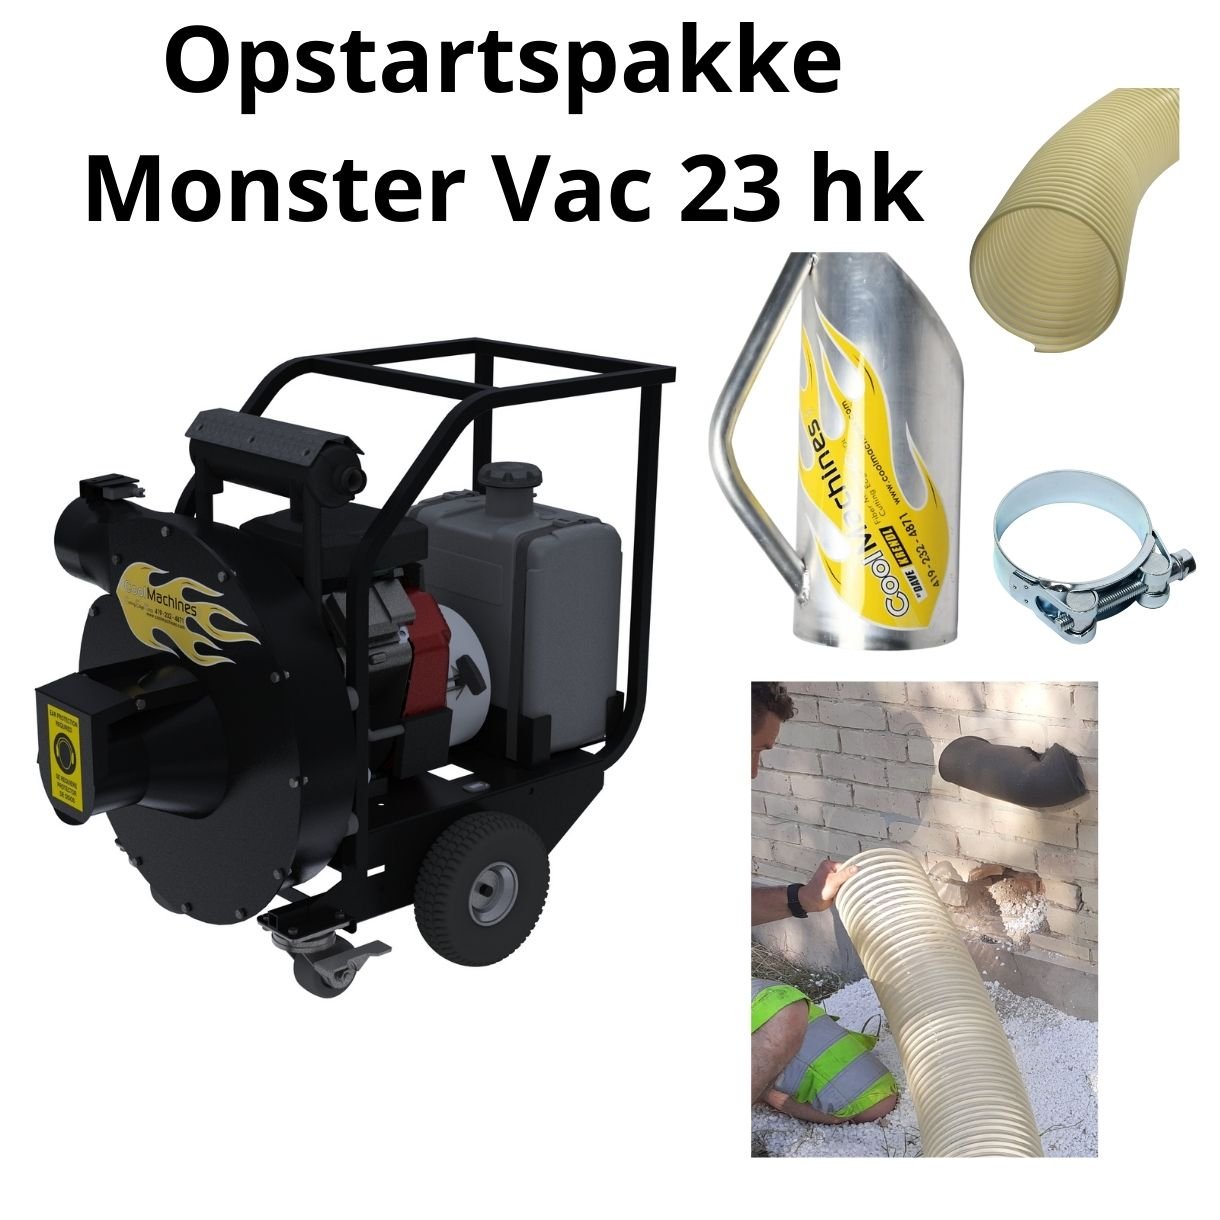 Opstartspakke Monster Vac 23 hk